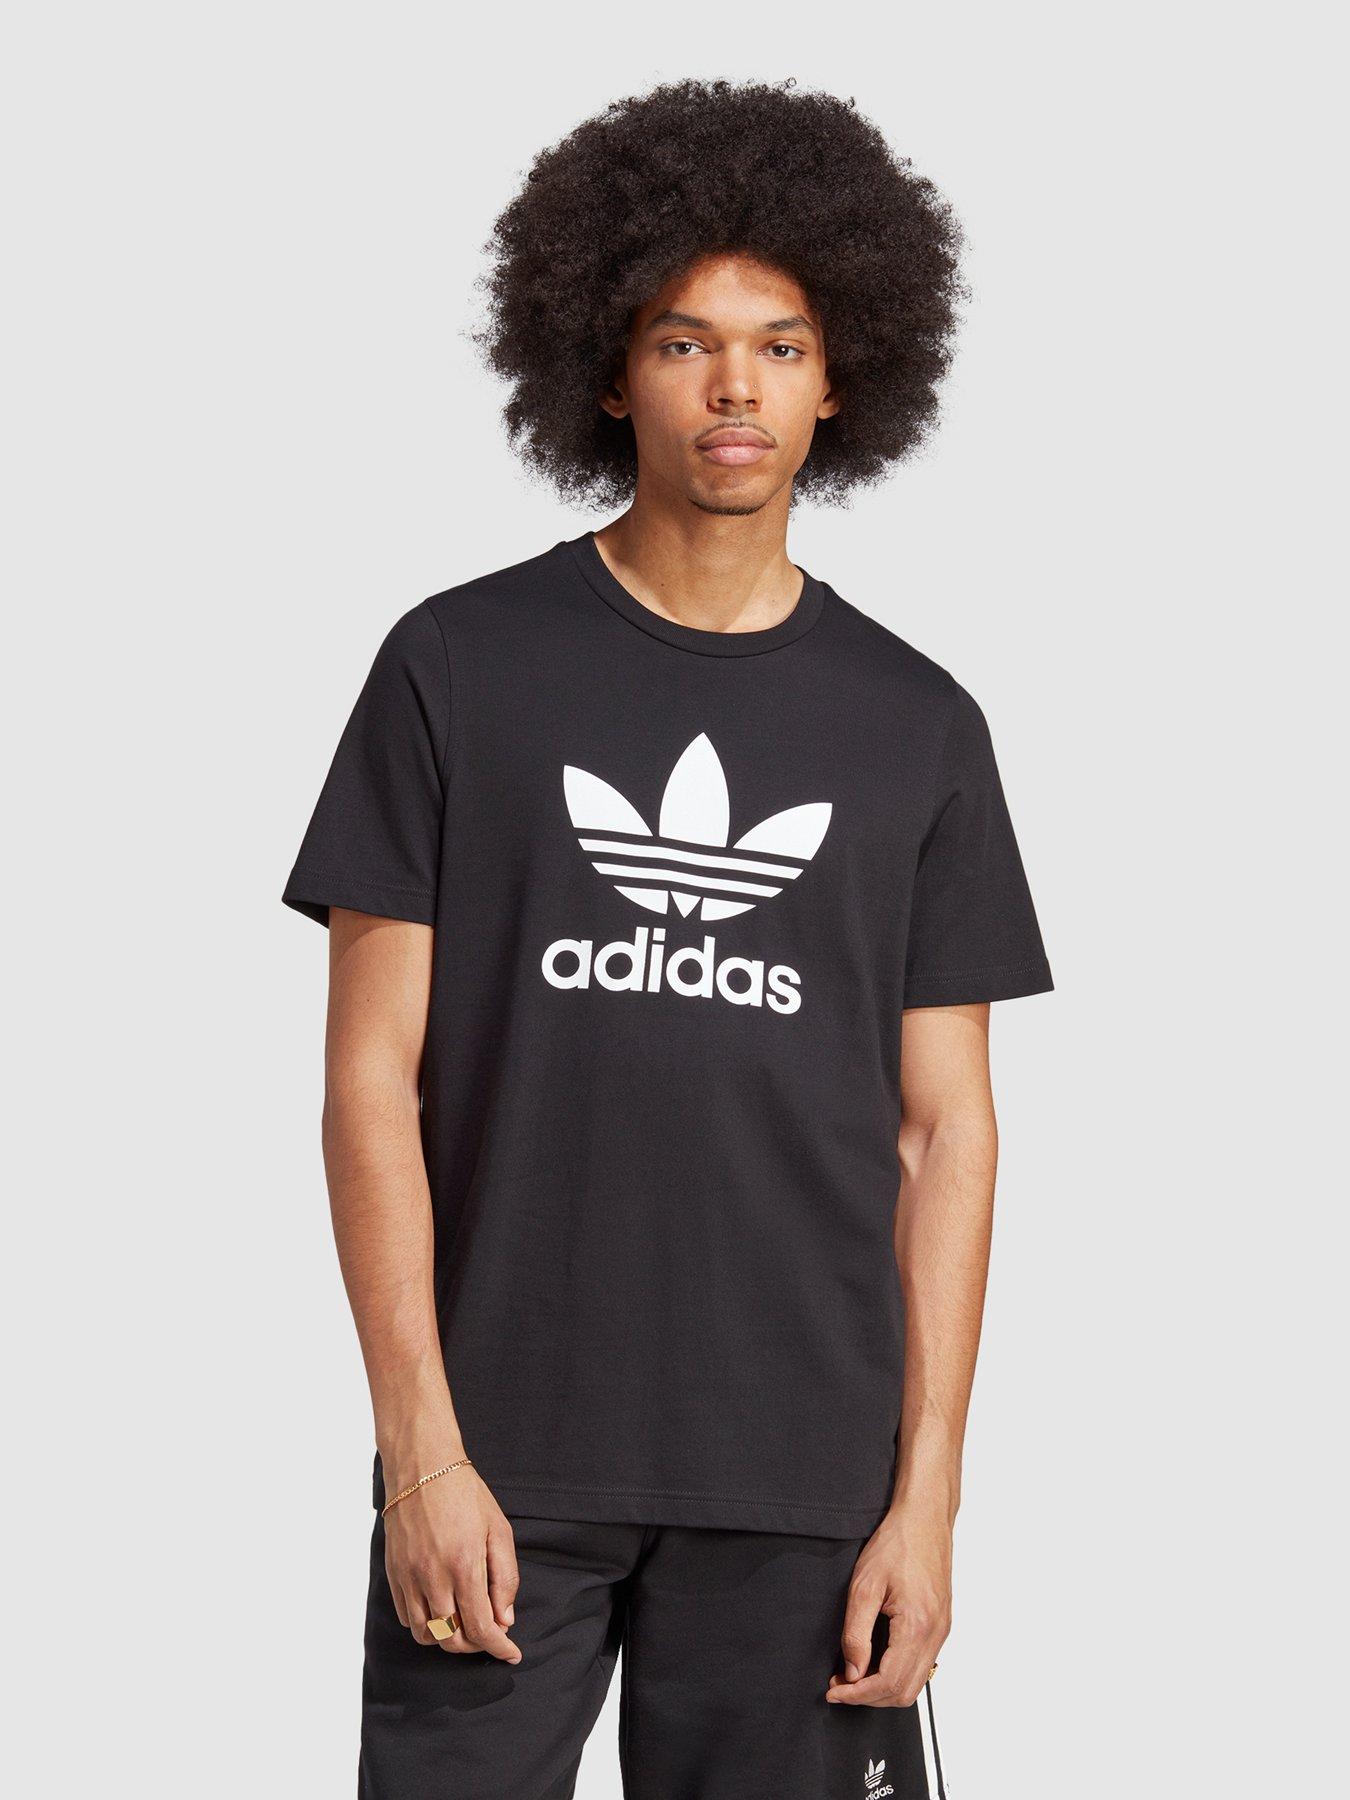 | T-Shirts | | & Adidas Ireland | T-shirts polos Men Very originals